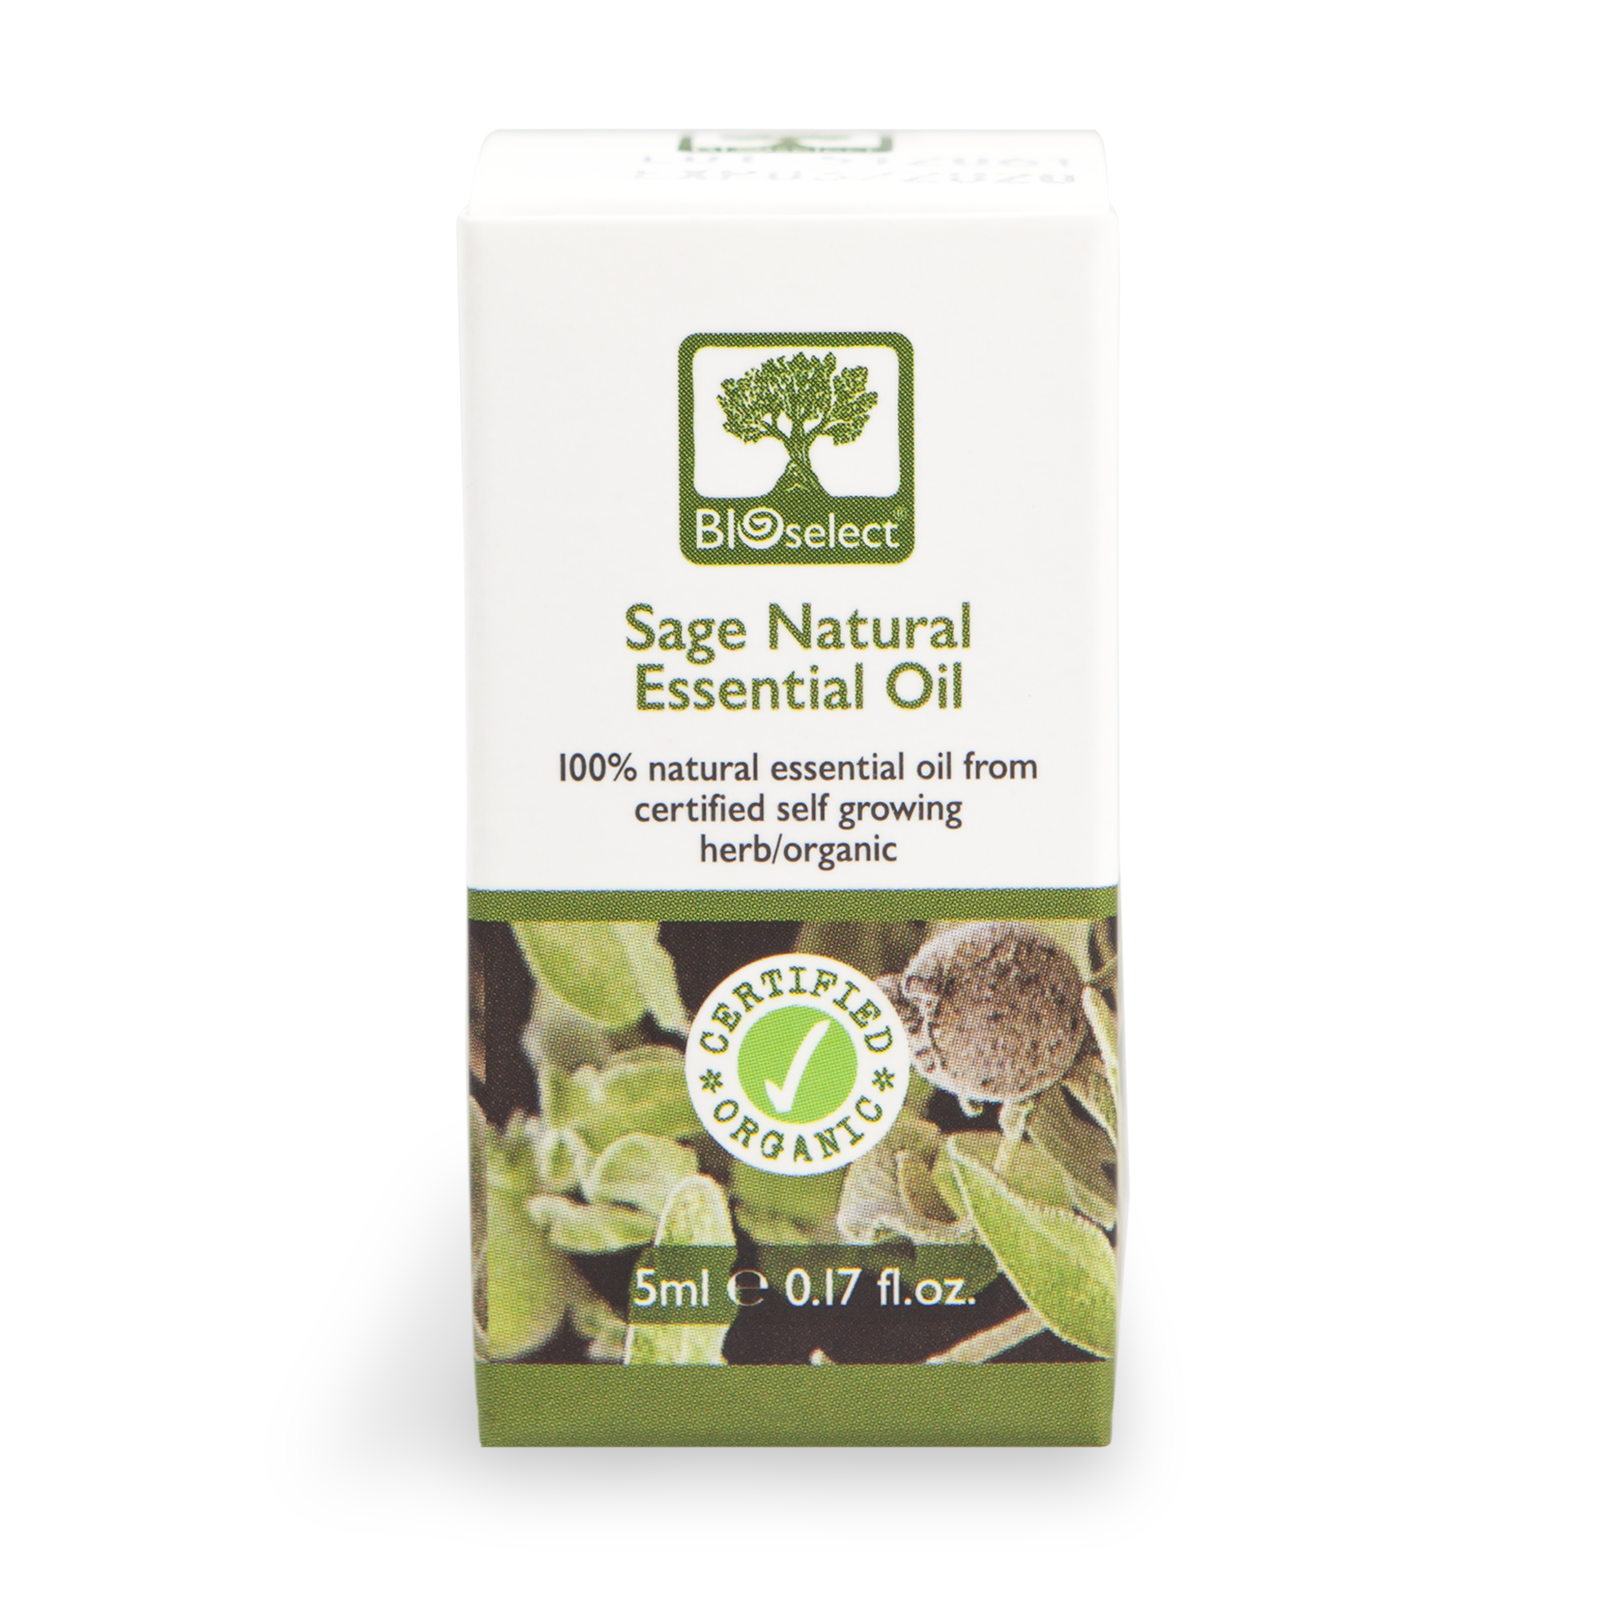 Bioselect Sage Natural Essential Oil Certified Organic